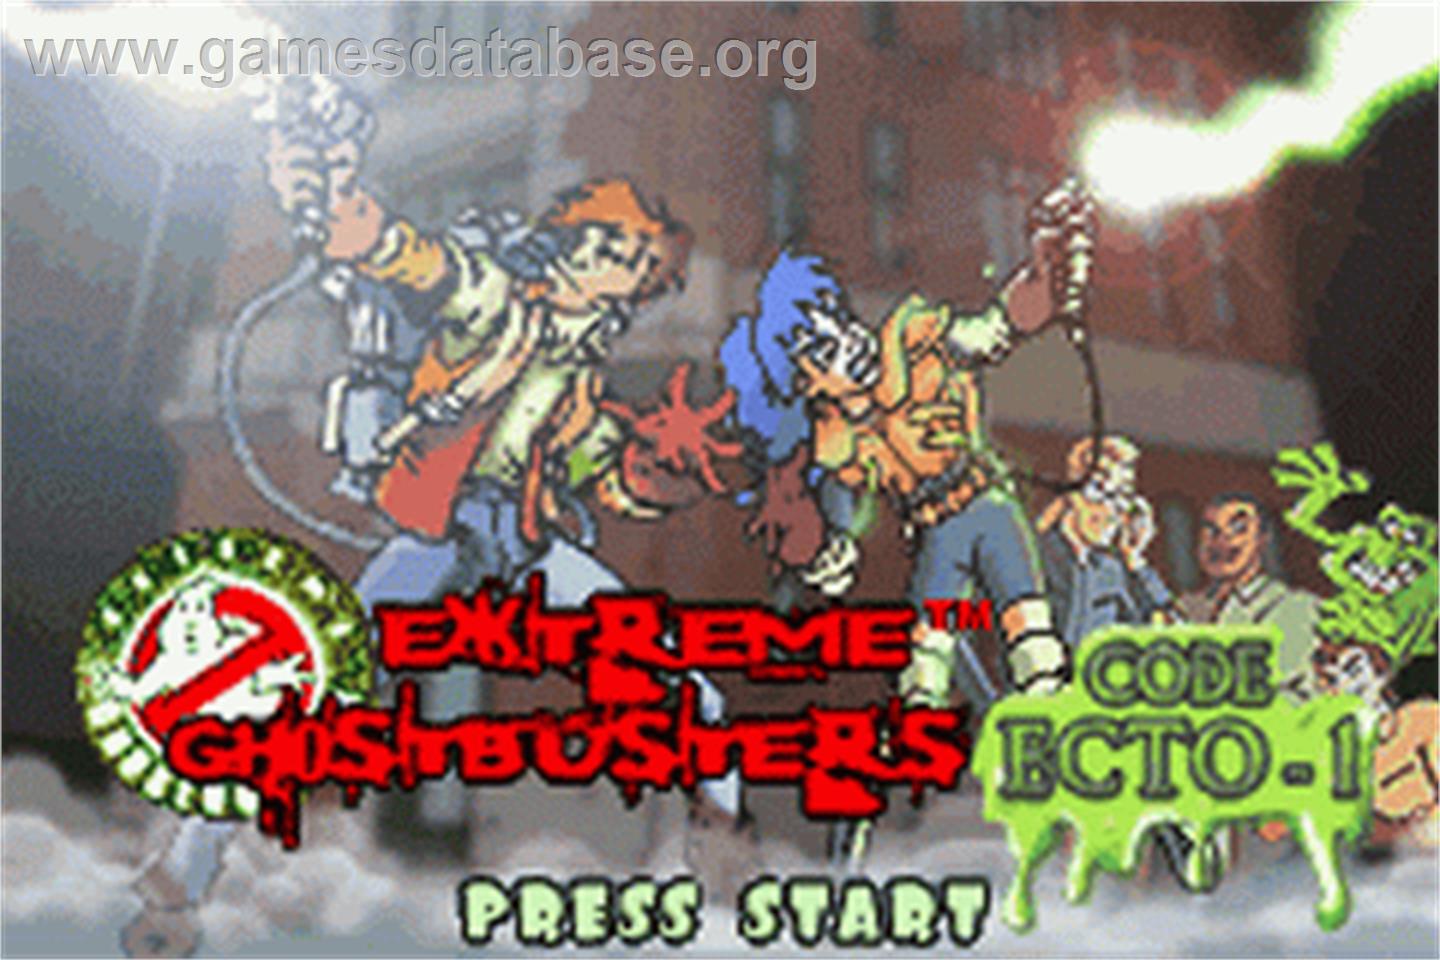 Extreme Ghostbusters: Code Ecto-1 - Nintendo Game Boy Advance - Artwork - Title Screen